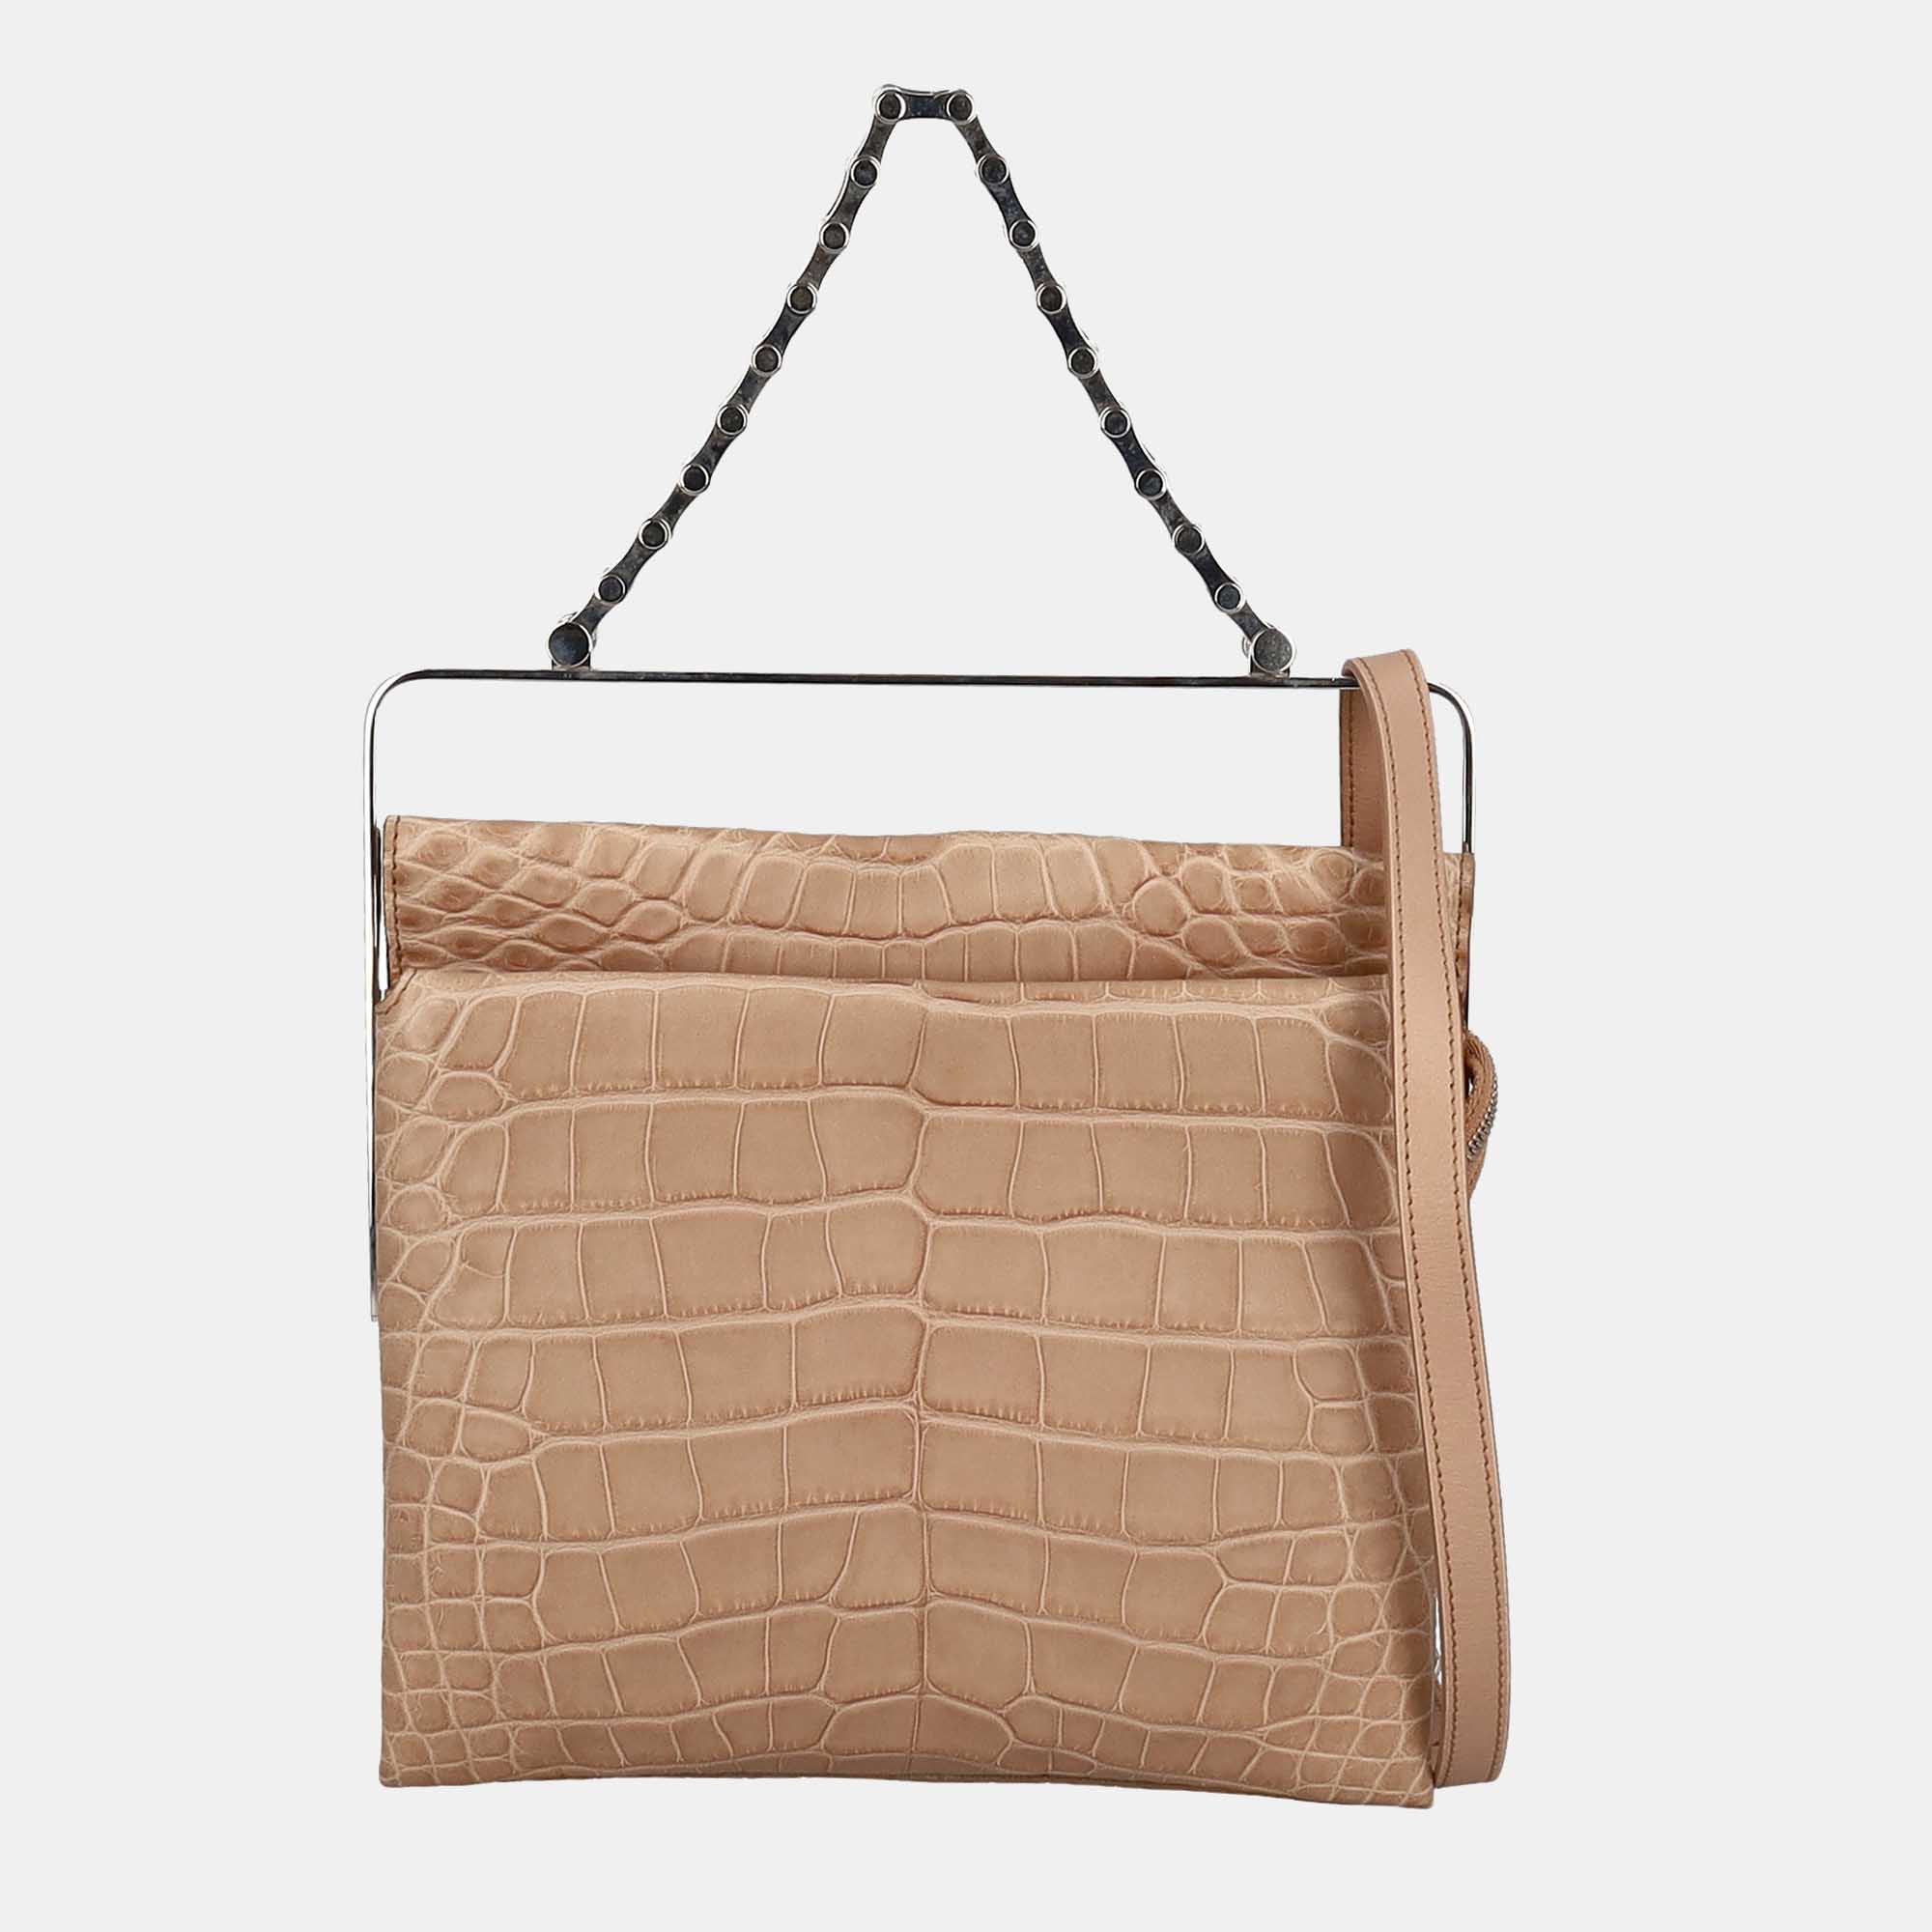 Balenciaga  Women's Leather Handbag - Beige - One Size